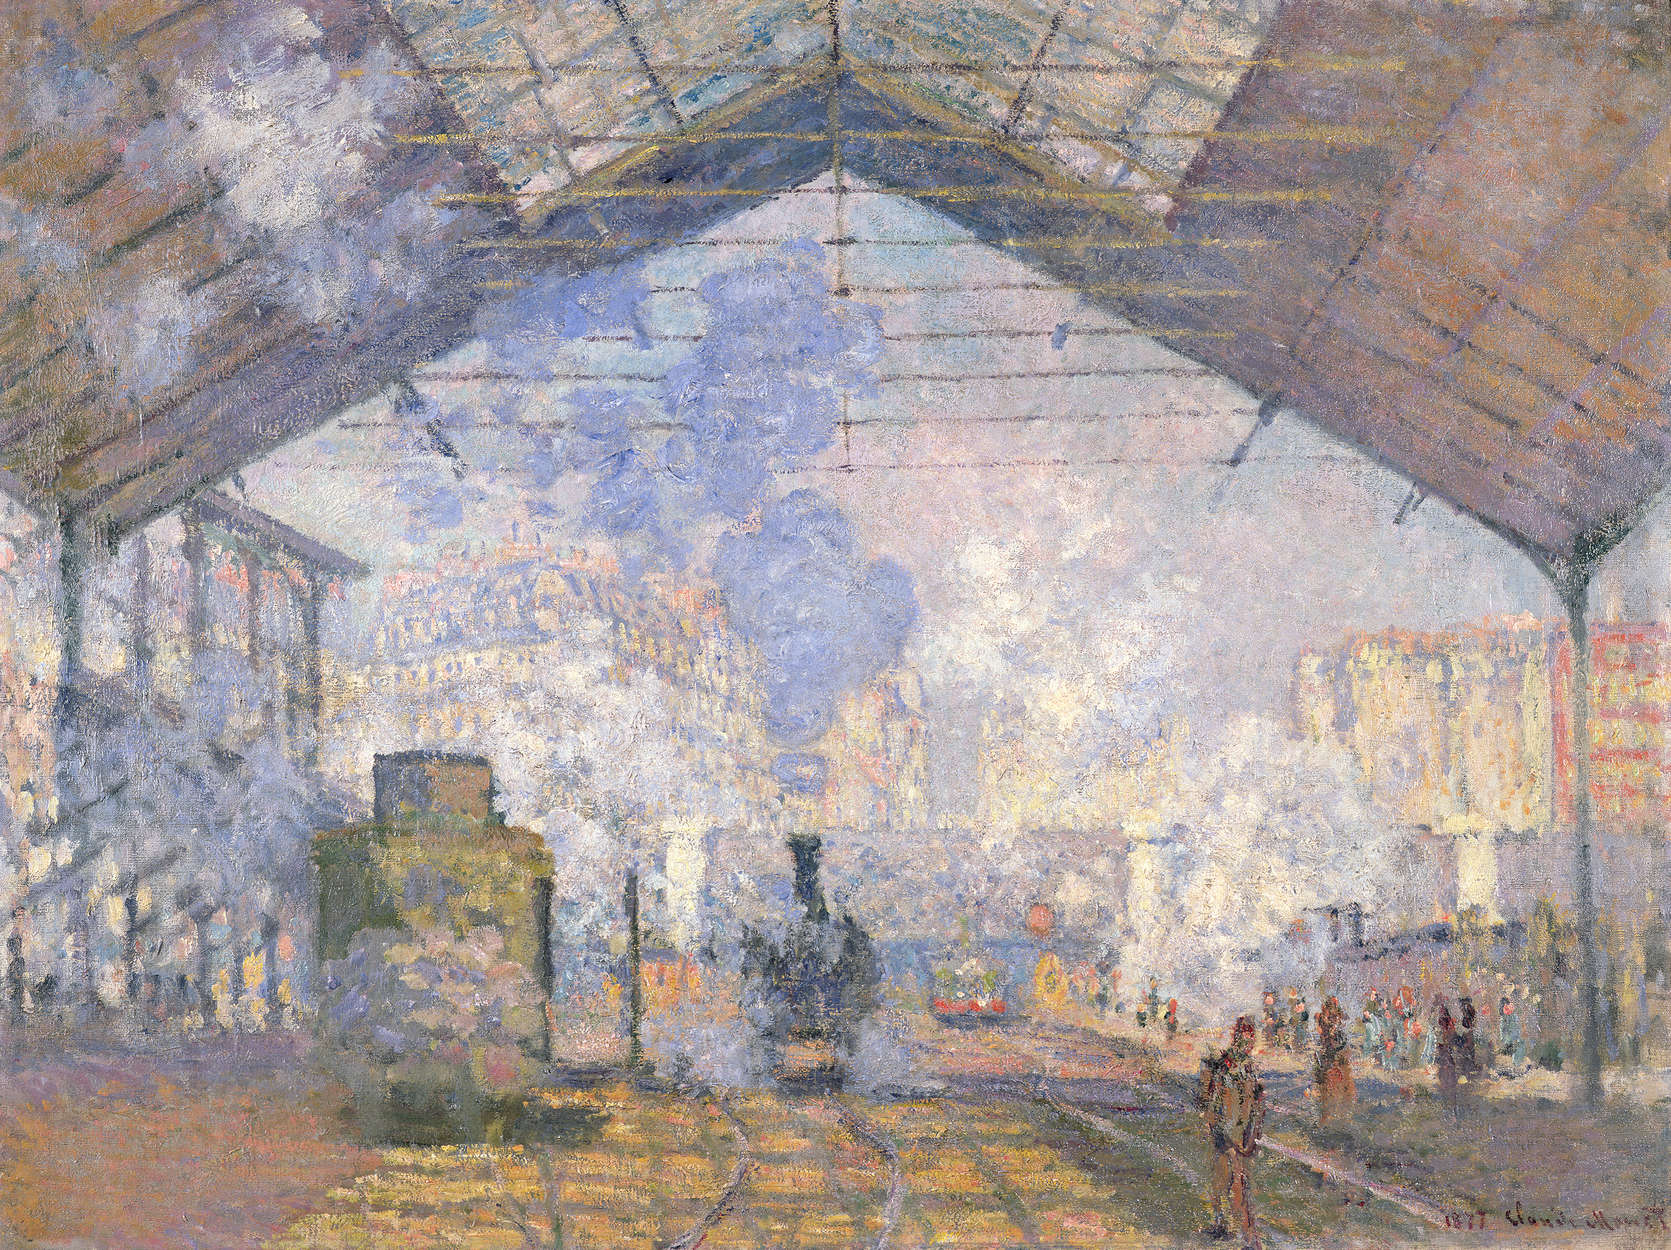             Photo wallpaper "Gare St. Lazare" by Claude Monet
        